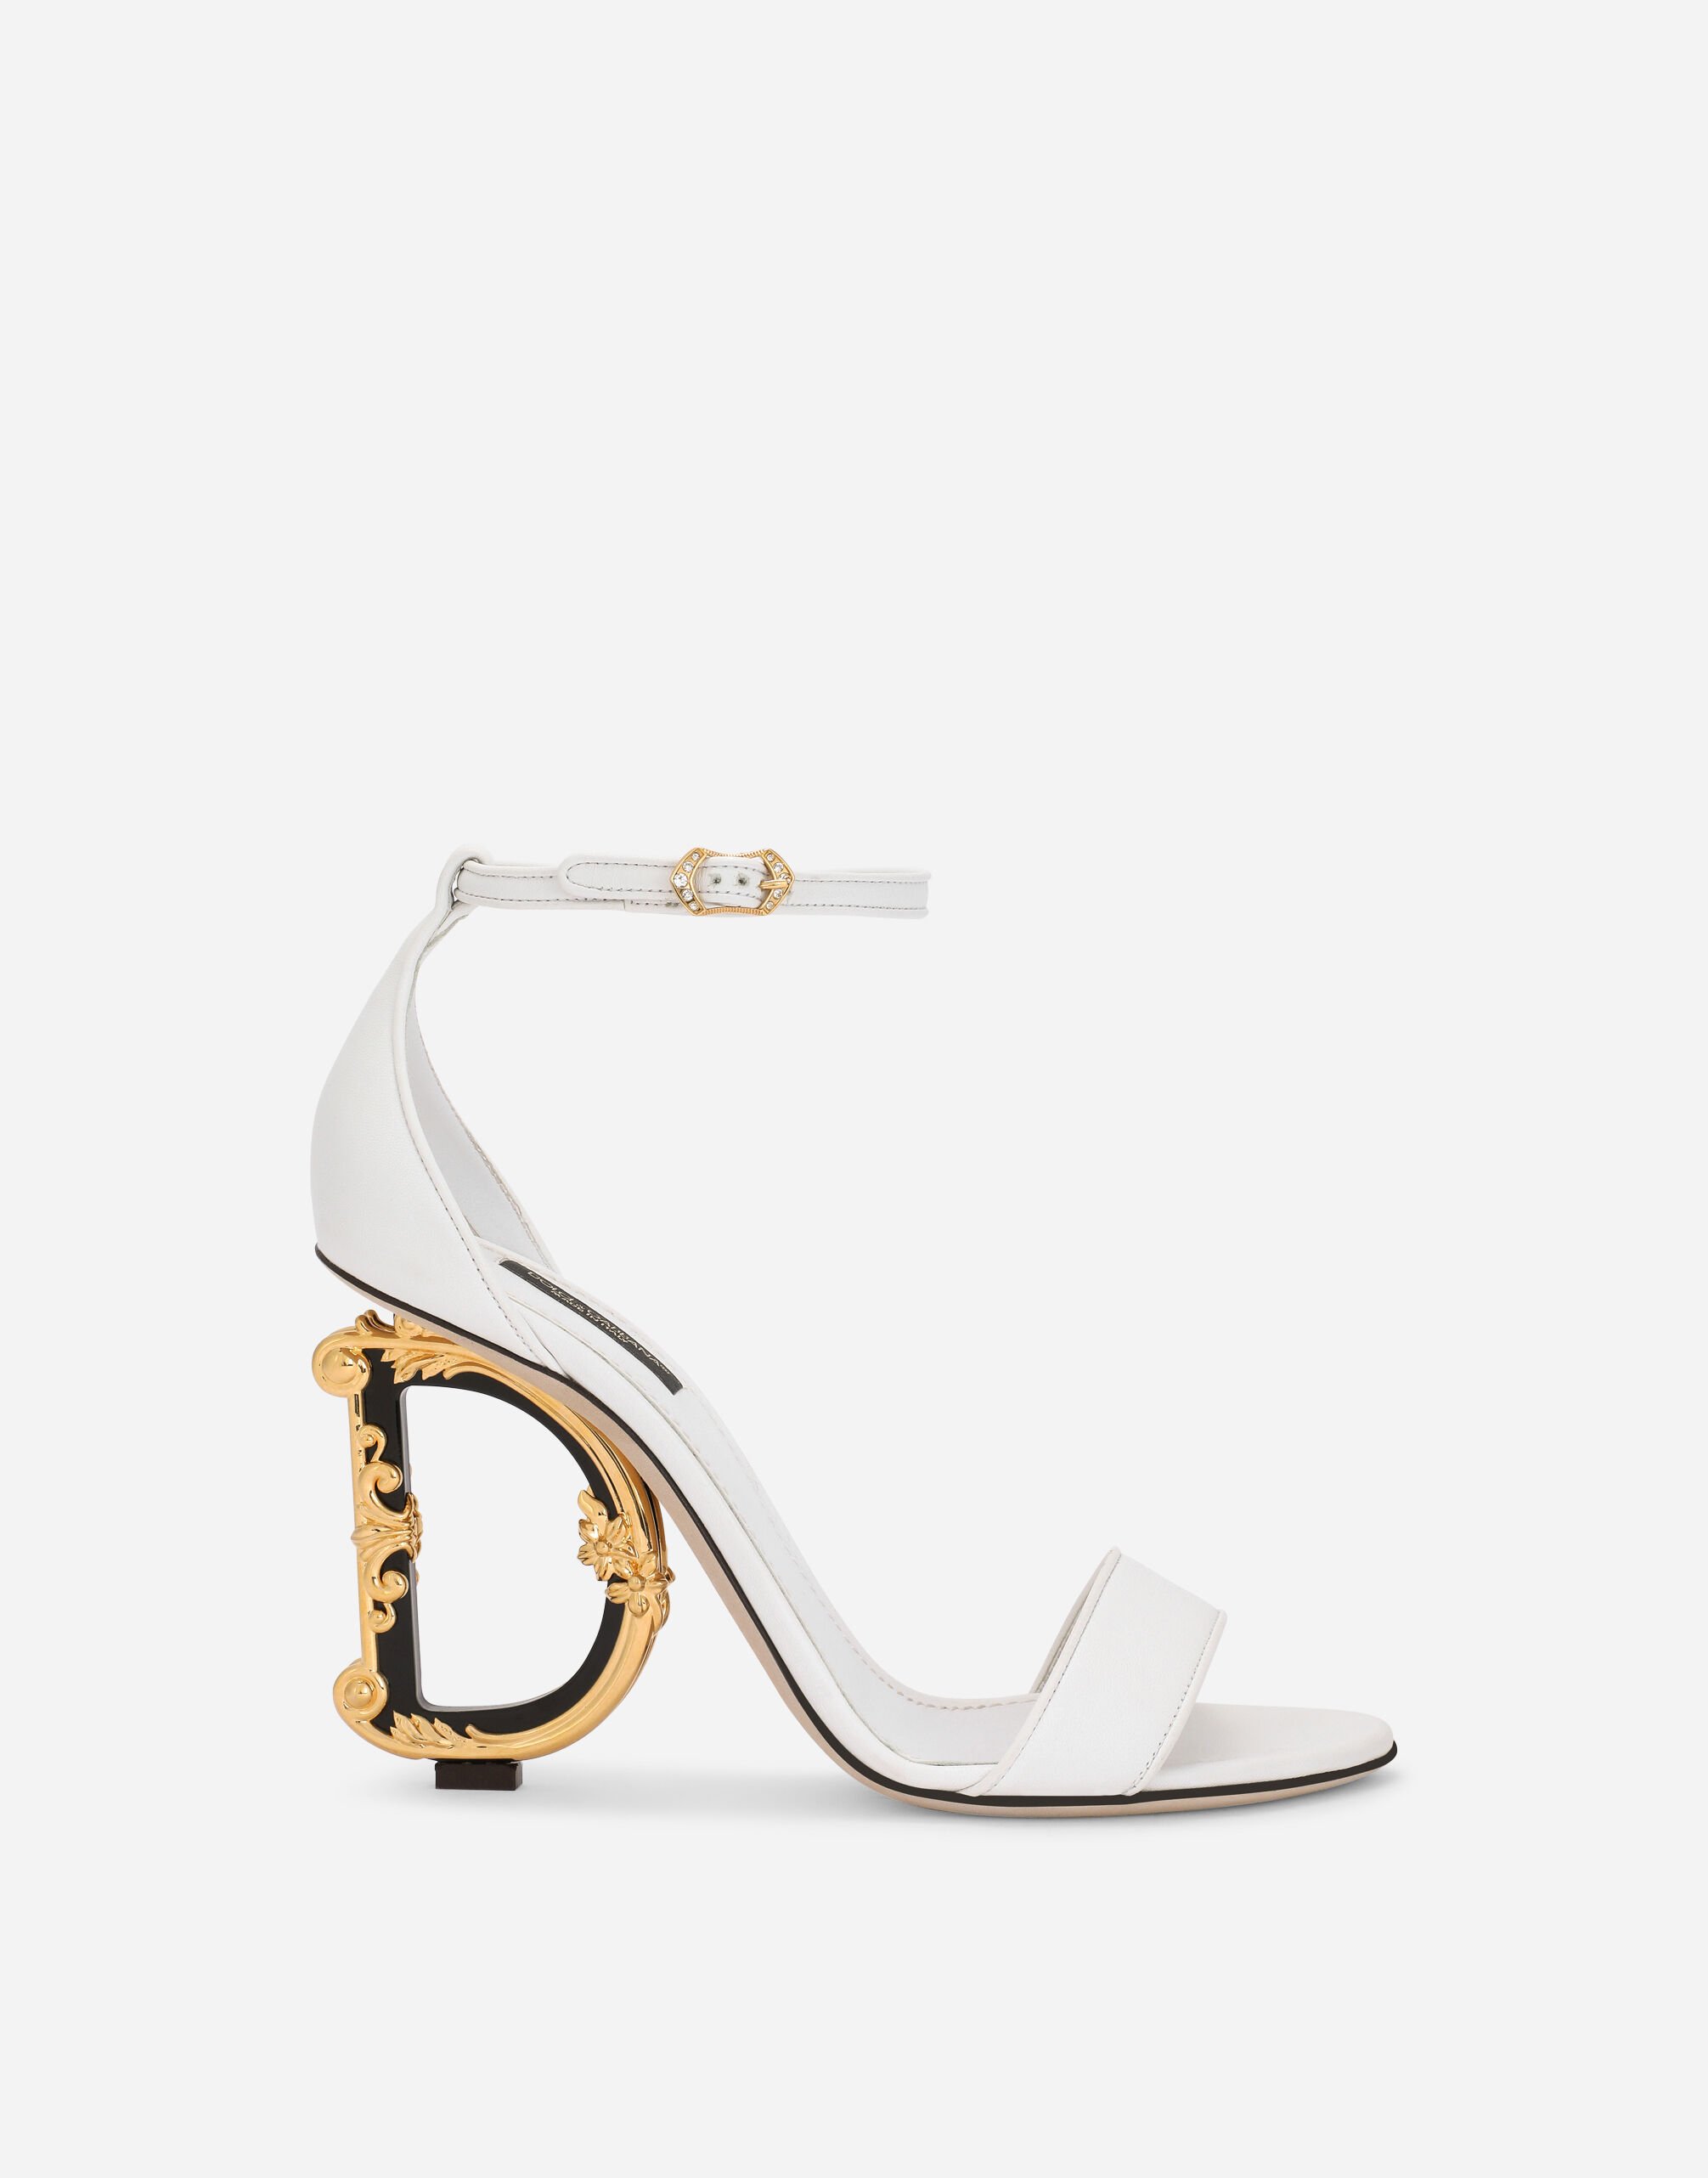 Dolce & Gabbana Nappa leather sandals with baroque DG detail Print CR1751AV885